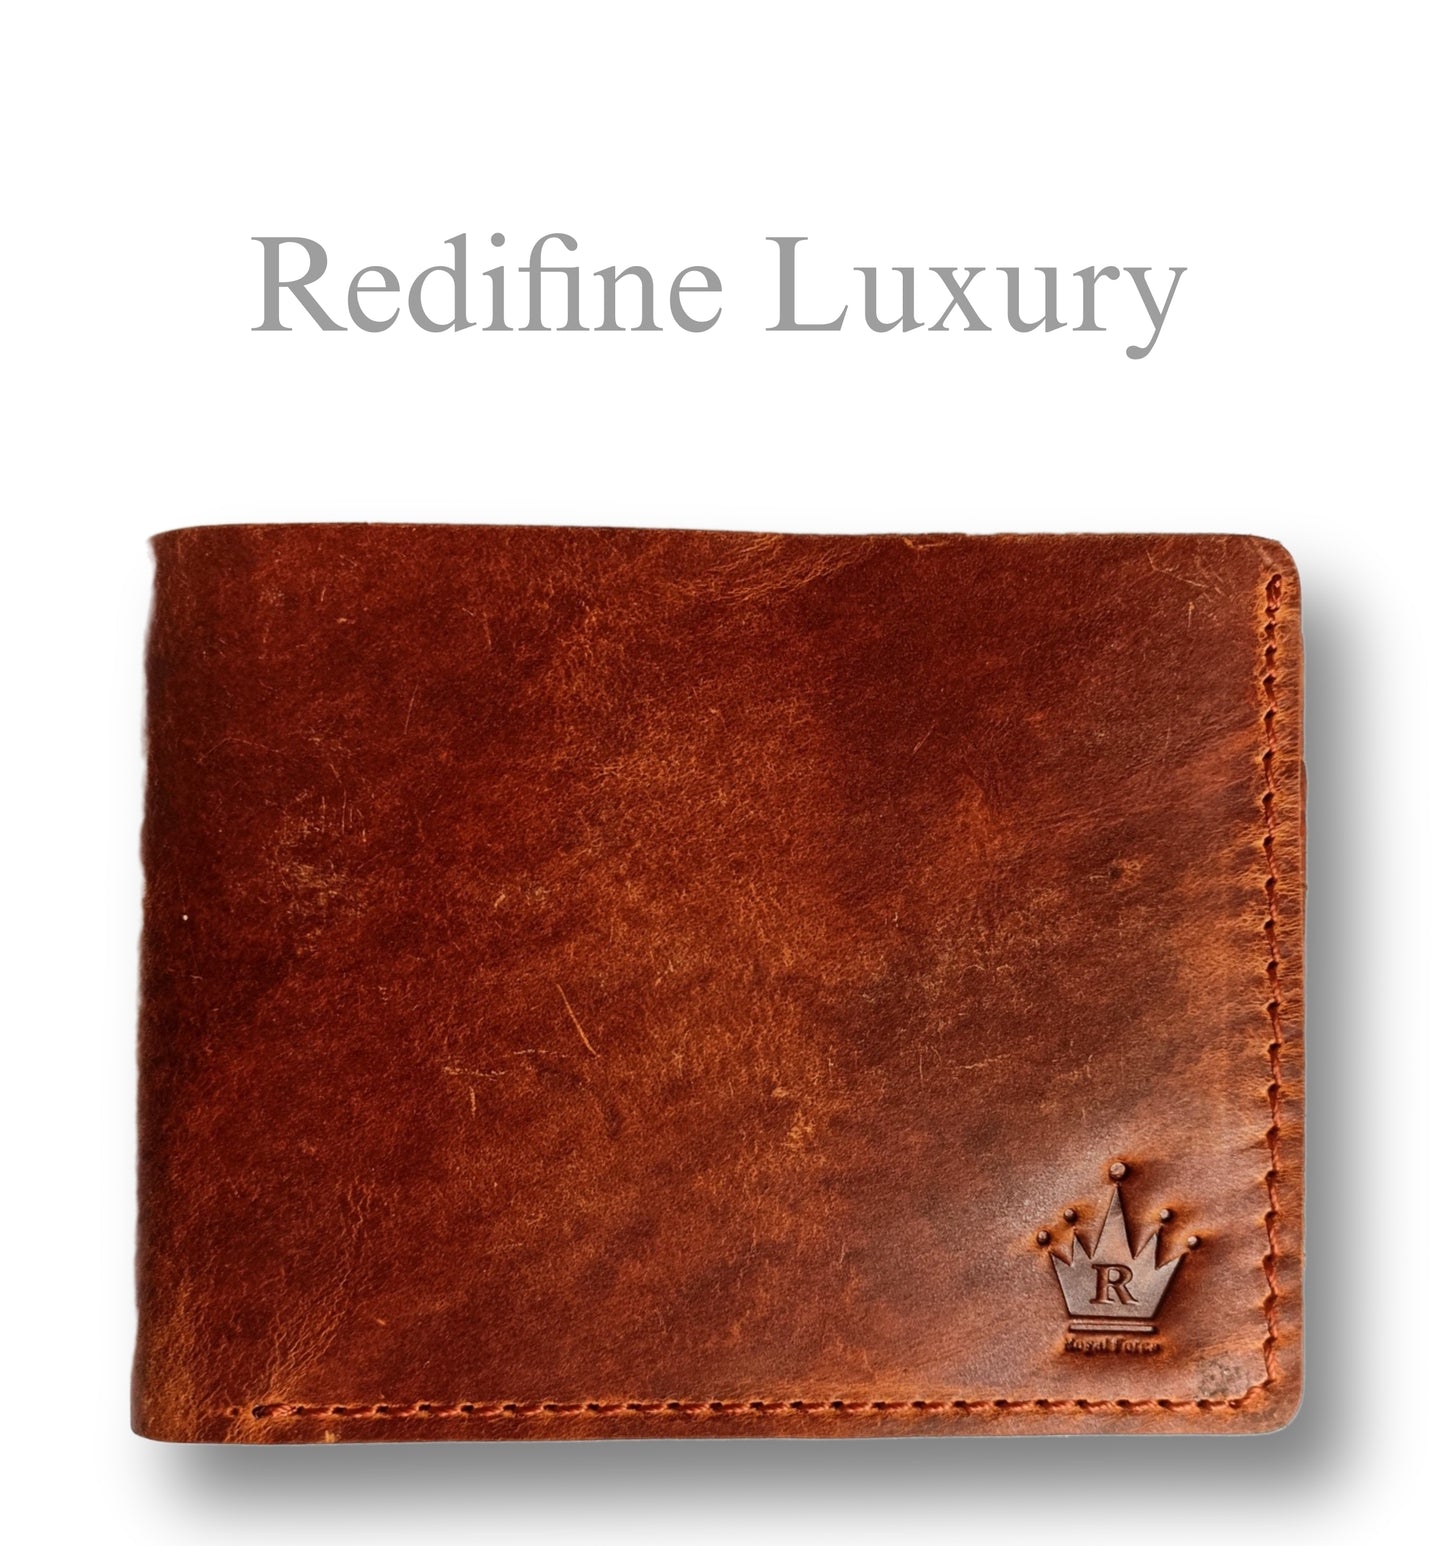 Royal Force Ultra Slim Oil Pull Up Genuine Leather Wallet Vintage Brown